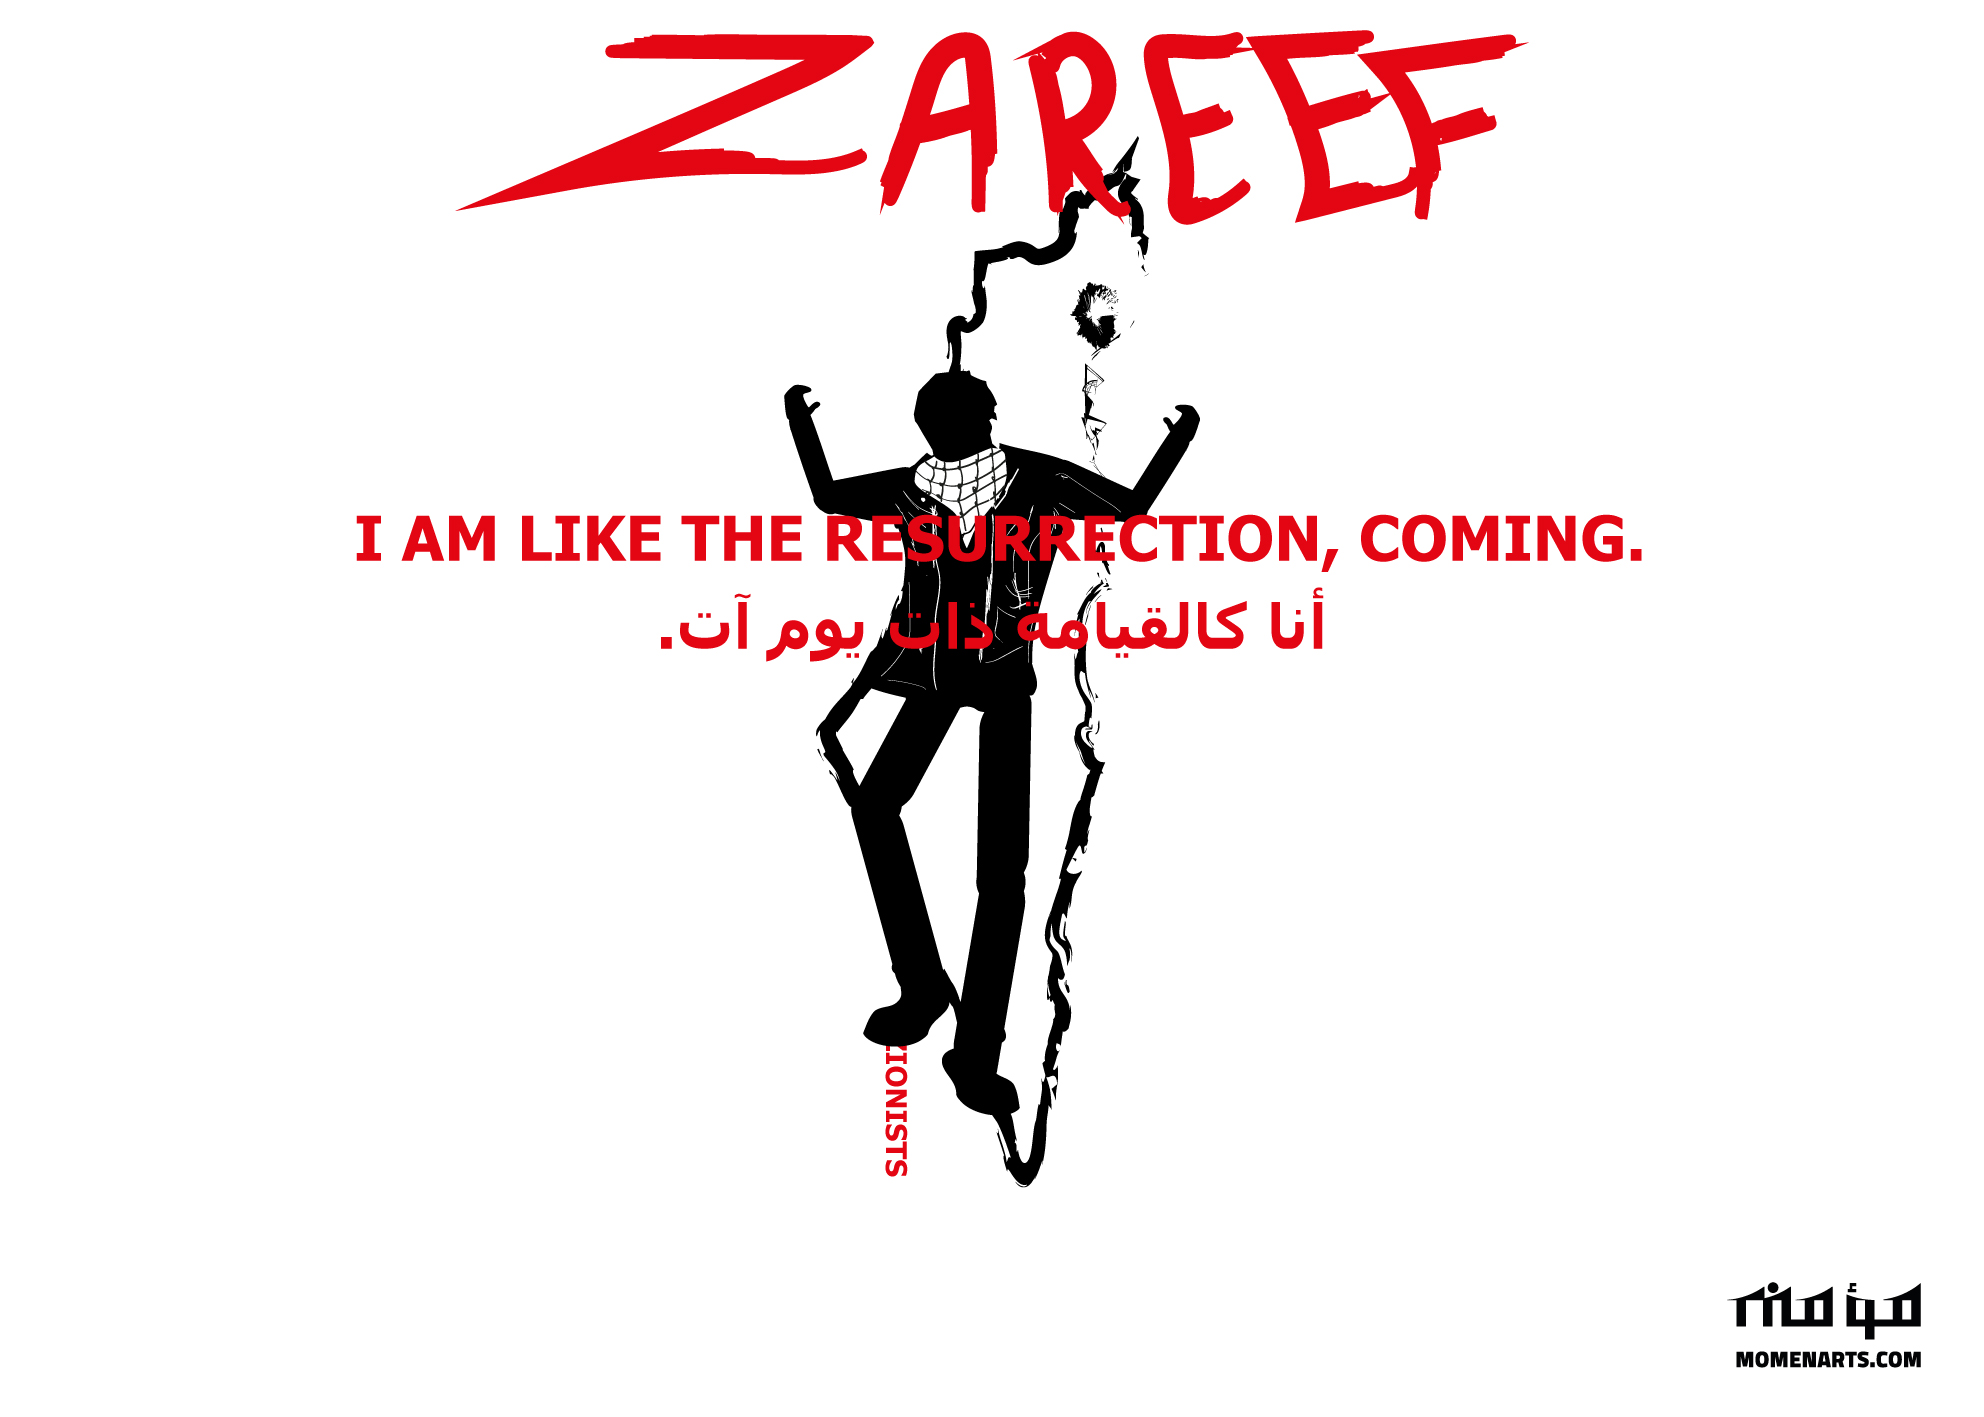 zareef i am like the resurrection, coming